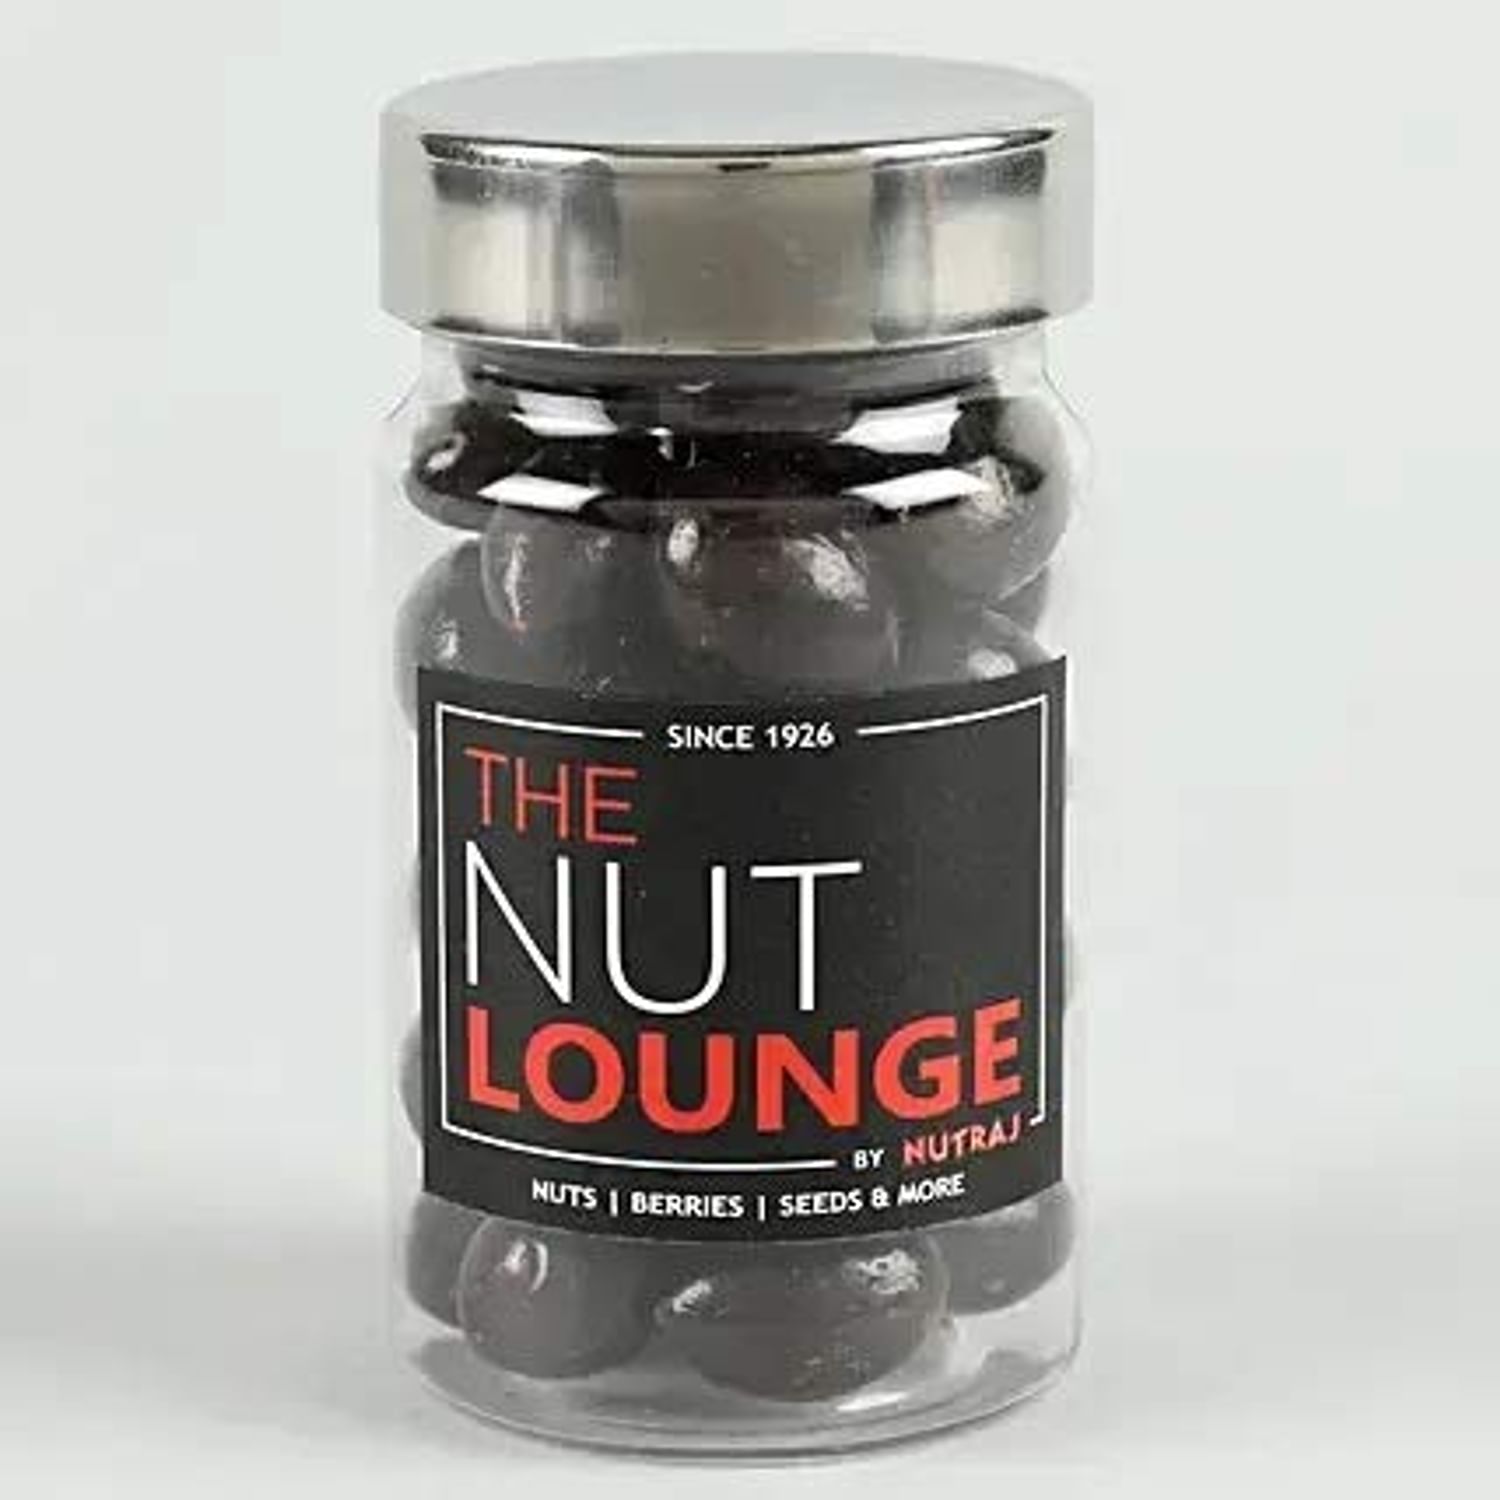 Nut Lounge' Chocolate Gift Box 400g (Sliced Cranberry, Almond Dark Chocolate, Hazelnut Chocolate, Cranberry Chocolate 100g Each)